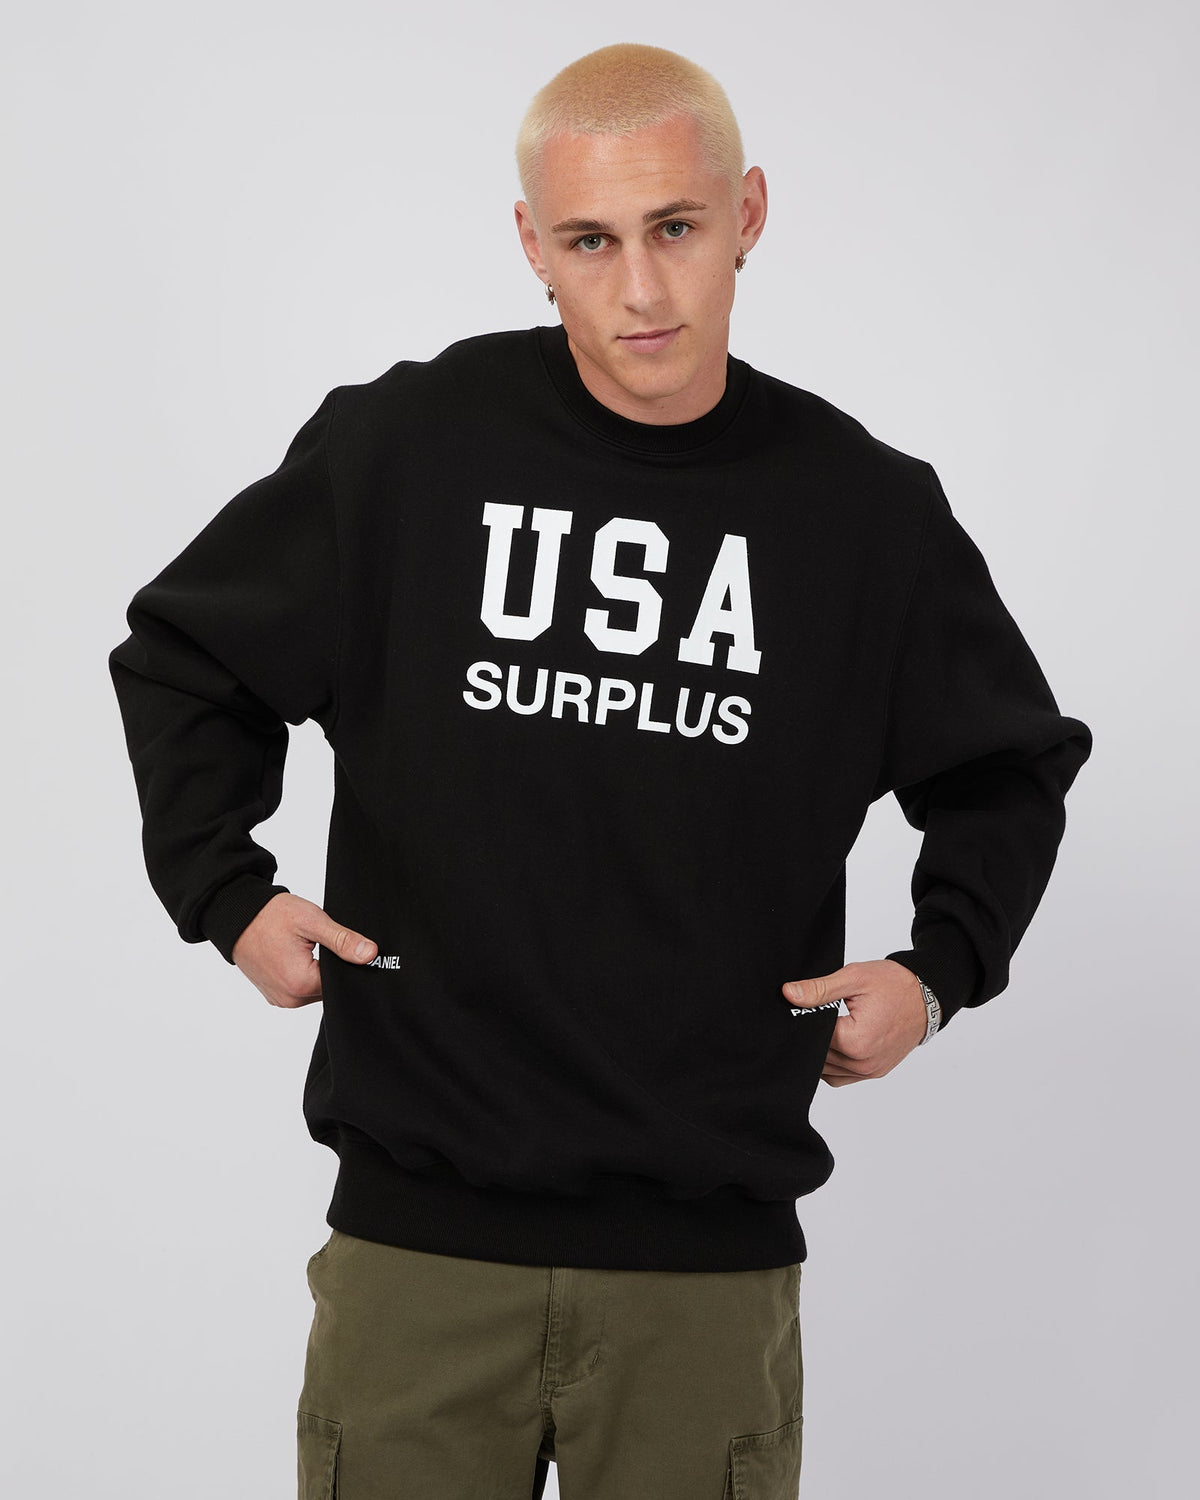 Daniel Patrick-Usa Surplus Crewneck Black-Edge Clothing